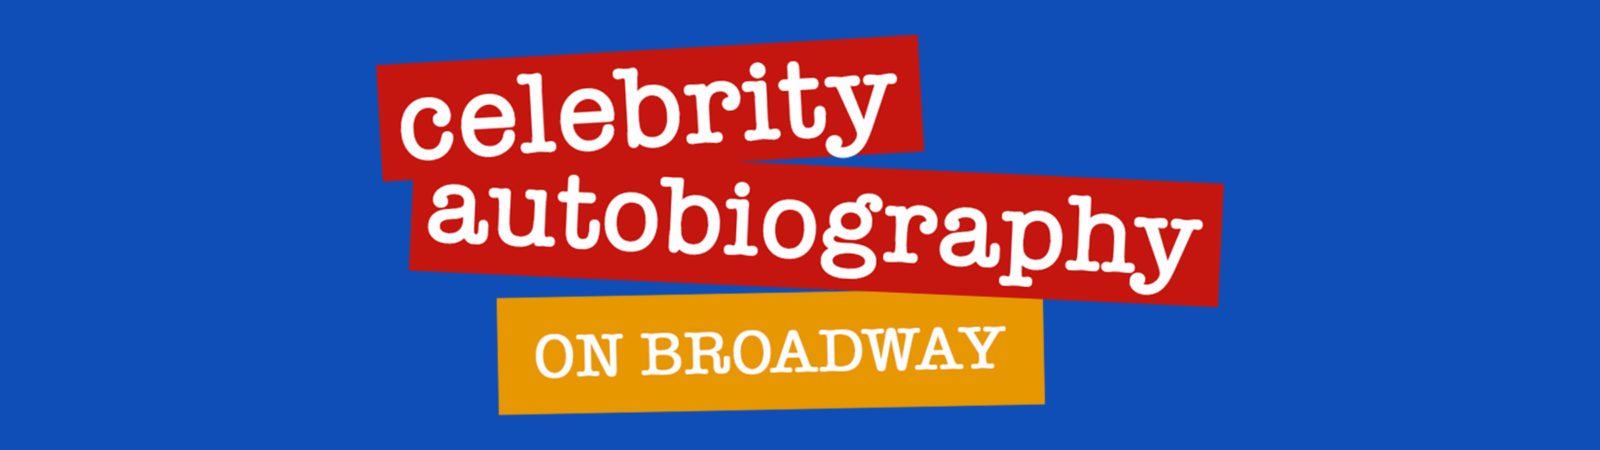 Celebrity Autobiography On Broadway